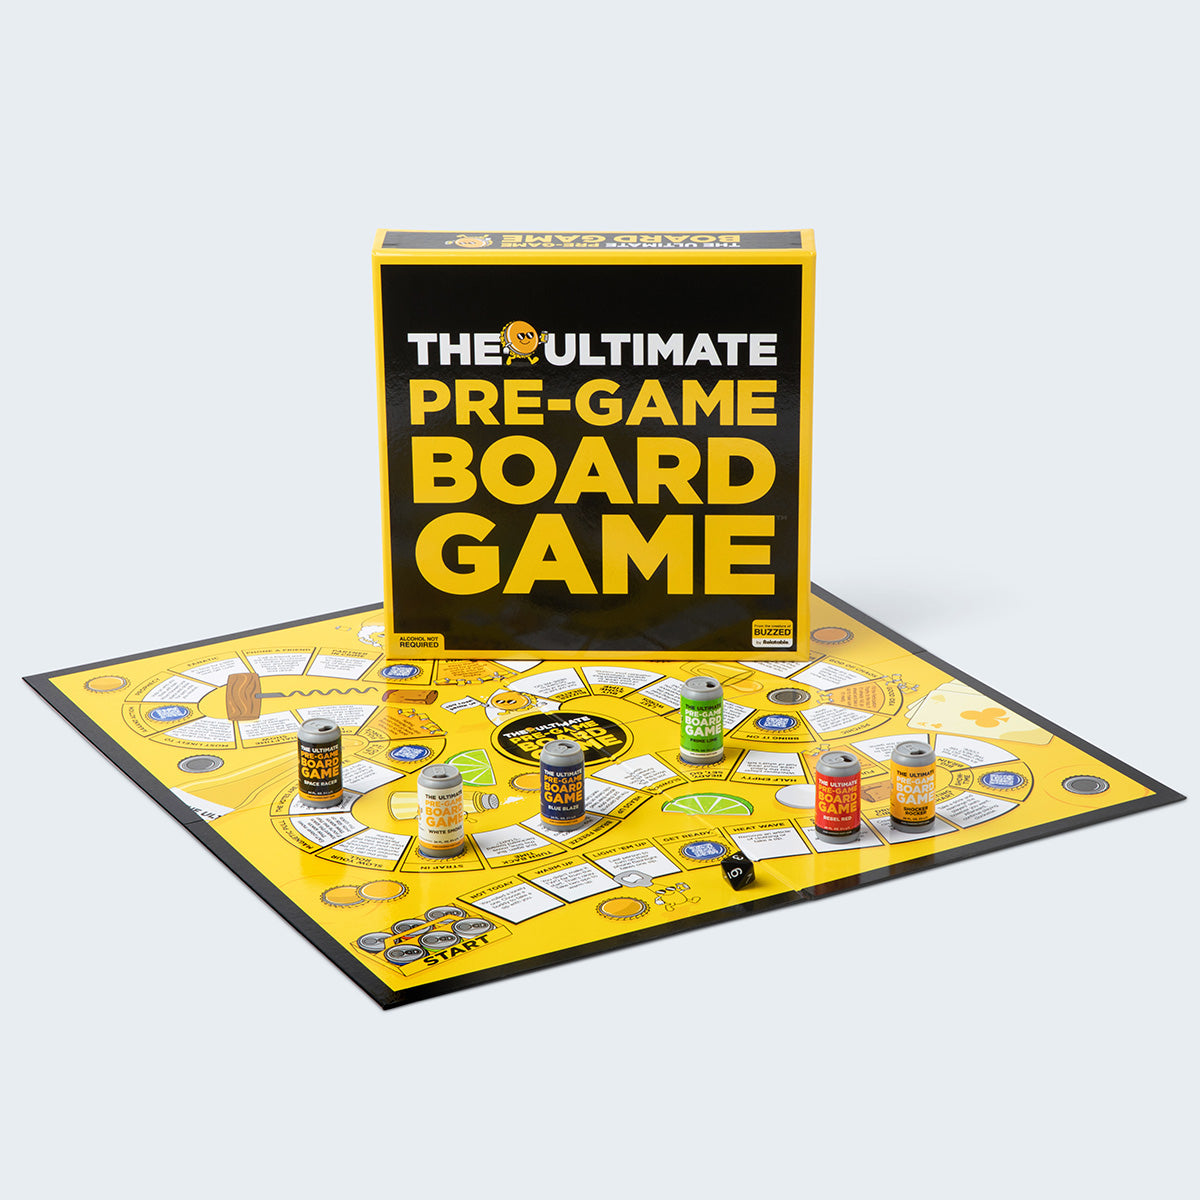 The Ultimate Pre-Game Board Game